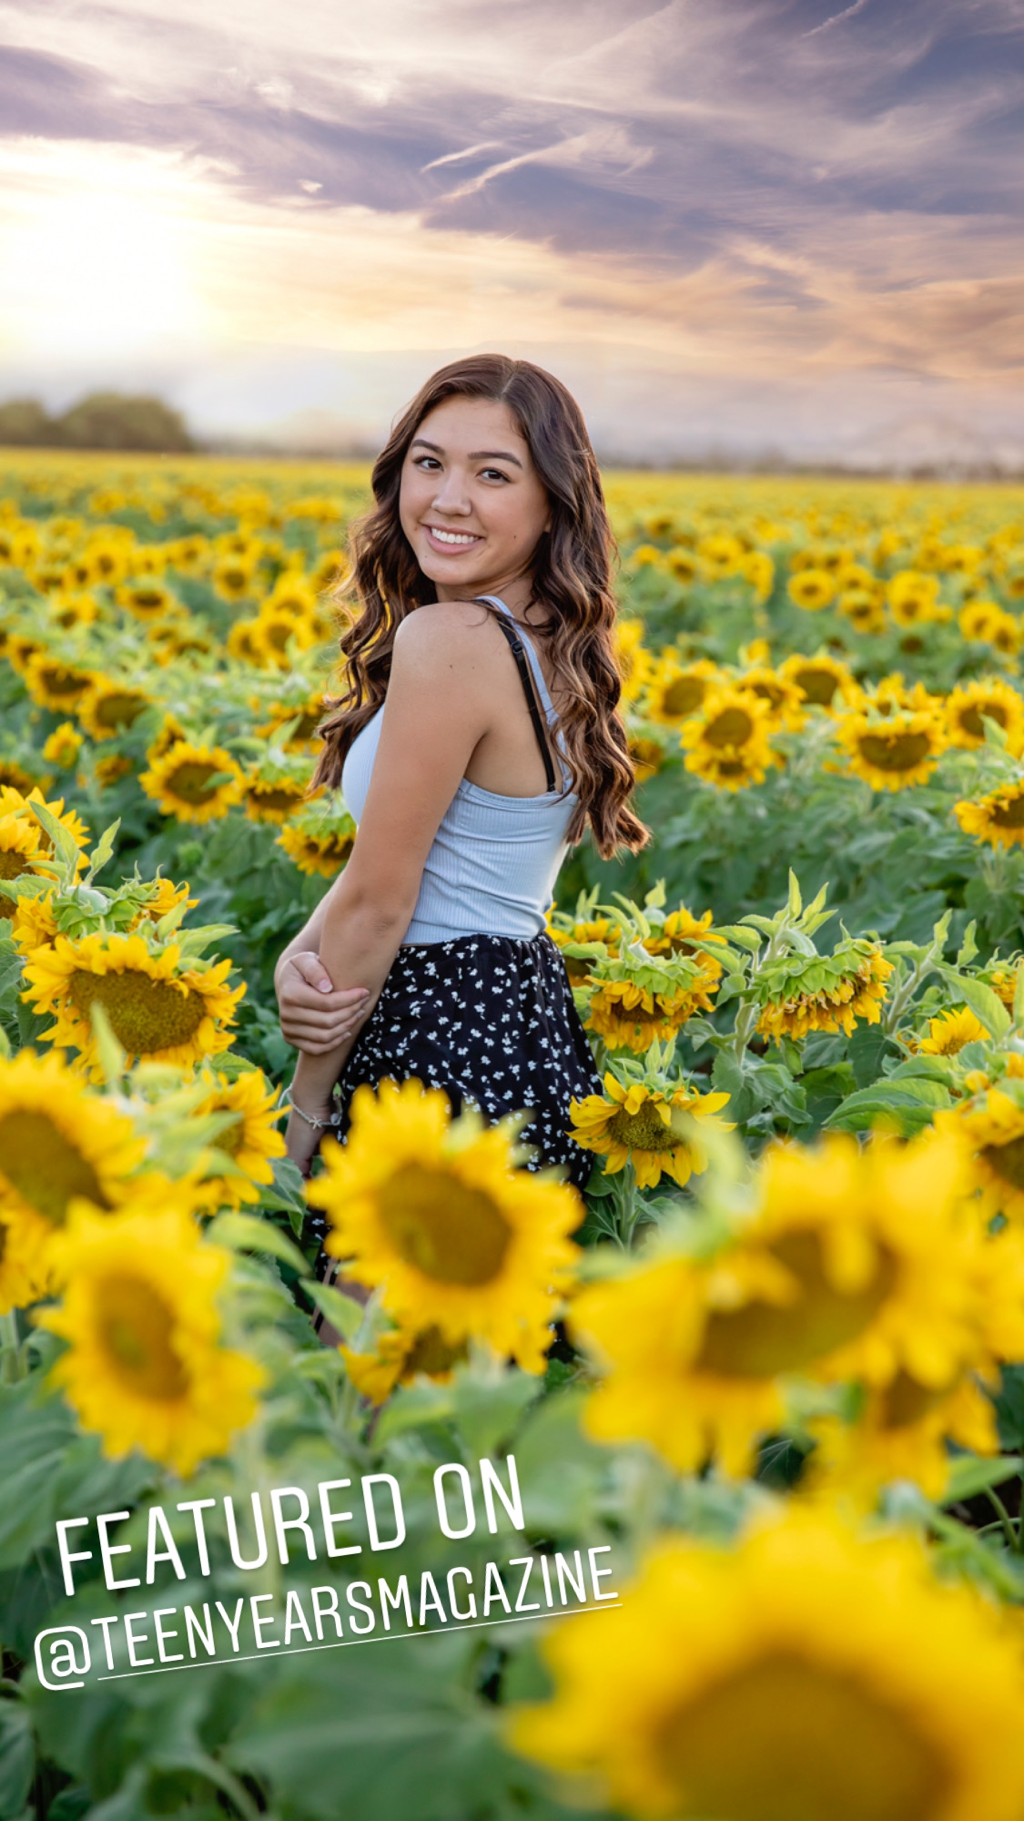 teenage girl with long brown hair in sunflower field